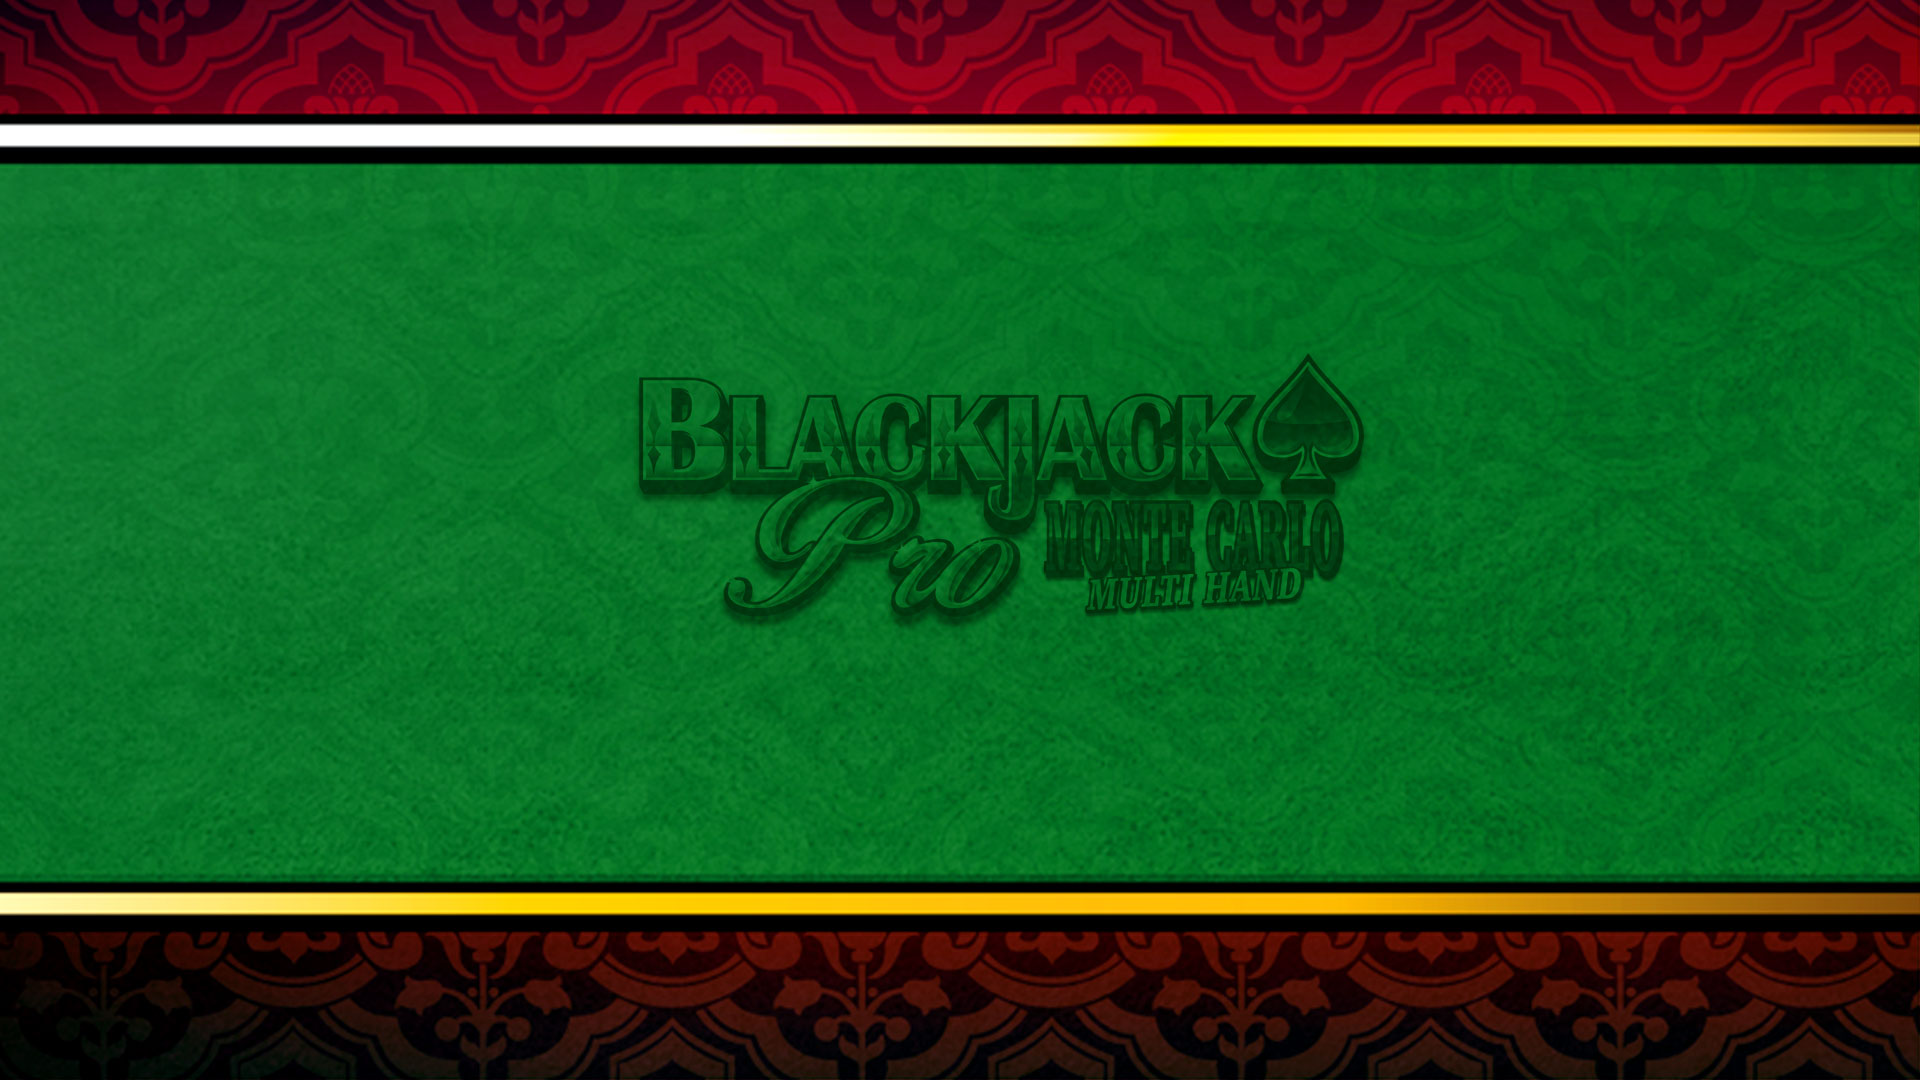 Game hight resolution background BlackjackPro MonteCarlo Multihand